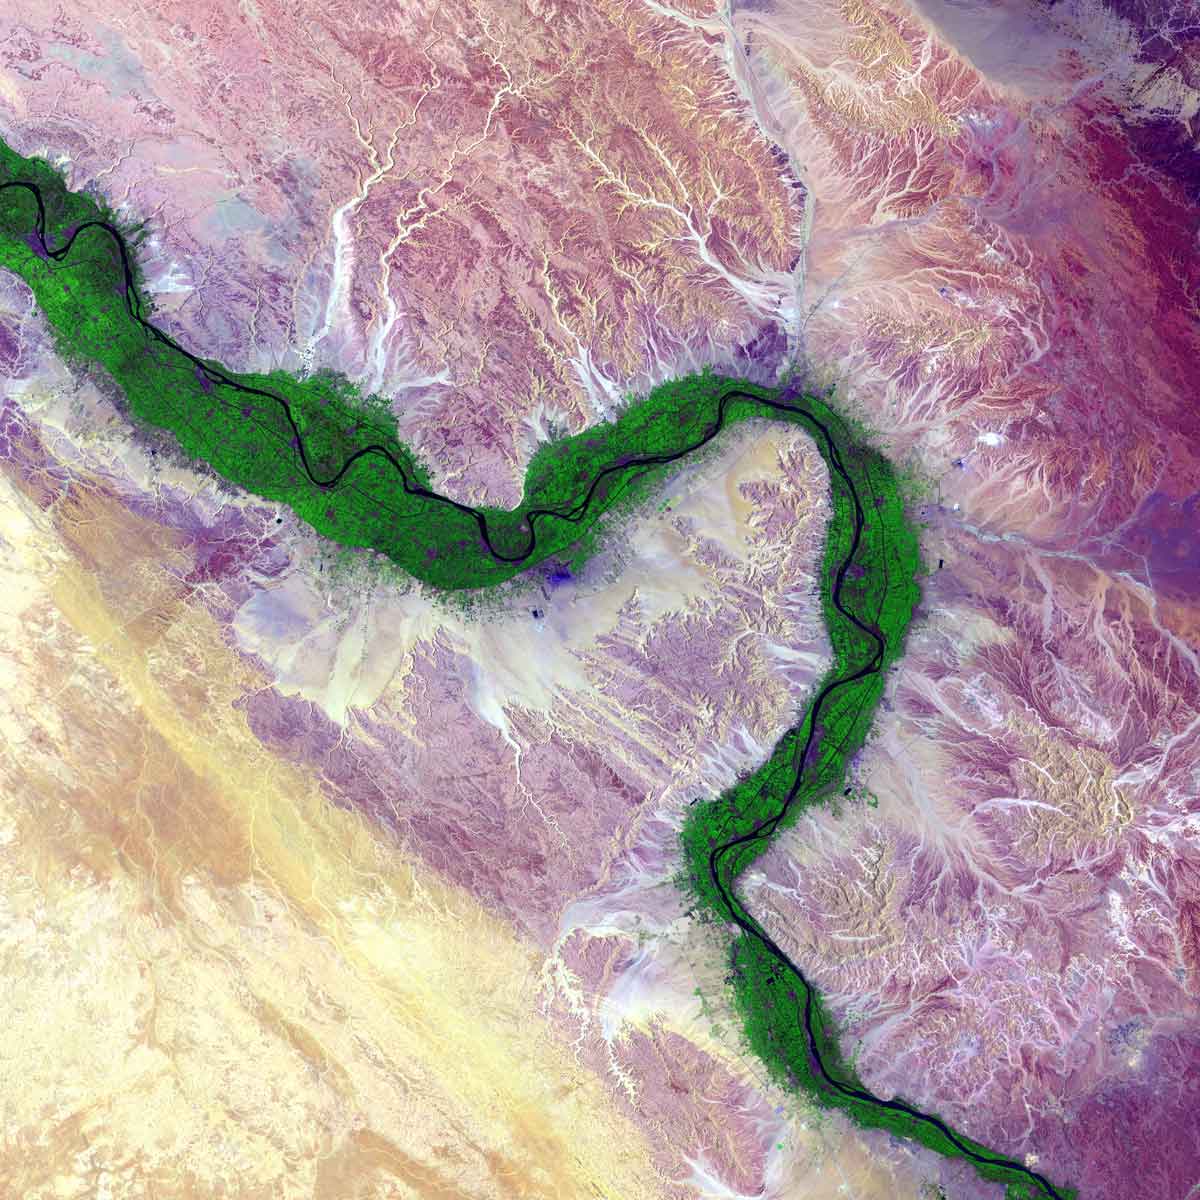 The Blue Nile in Ethiopia